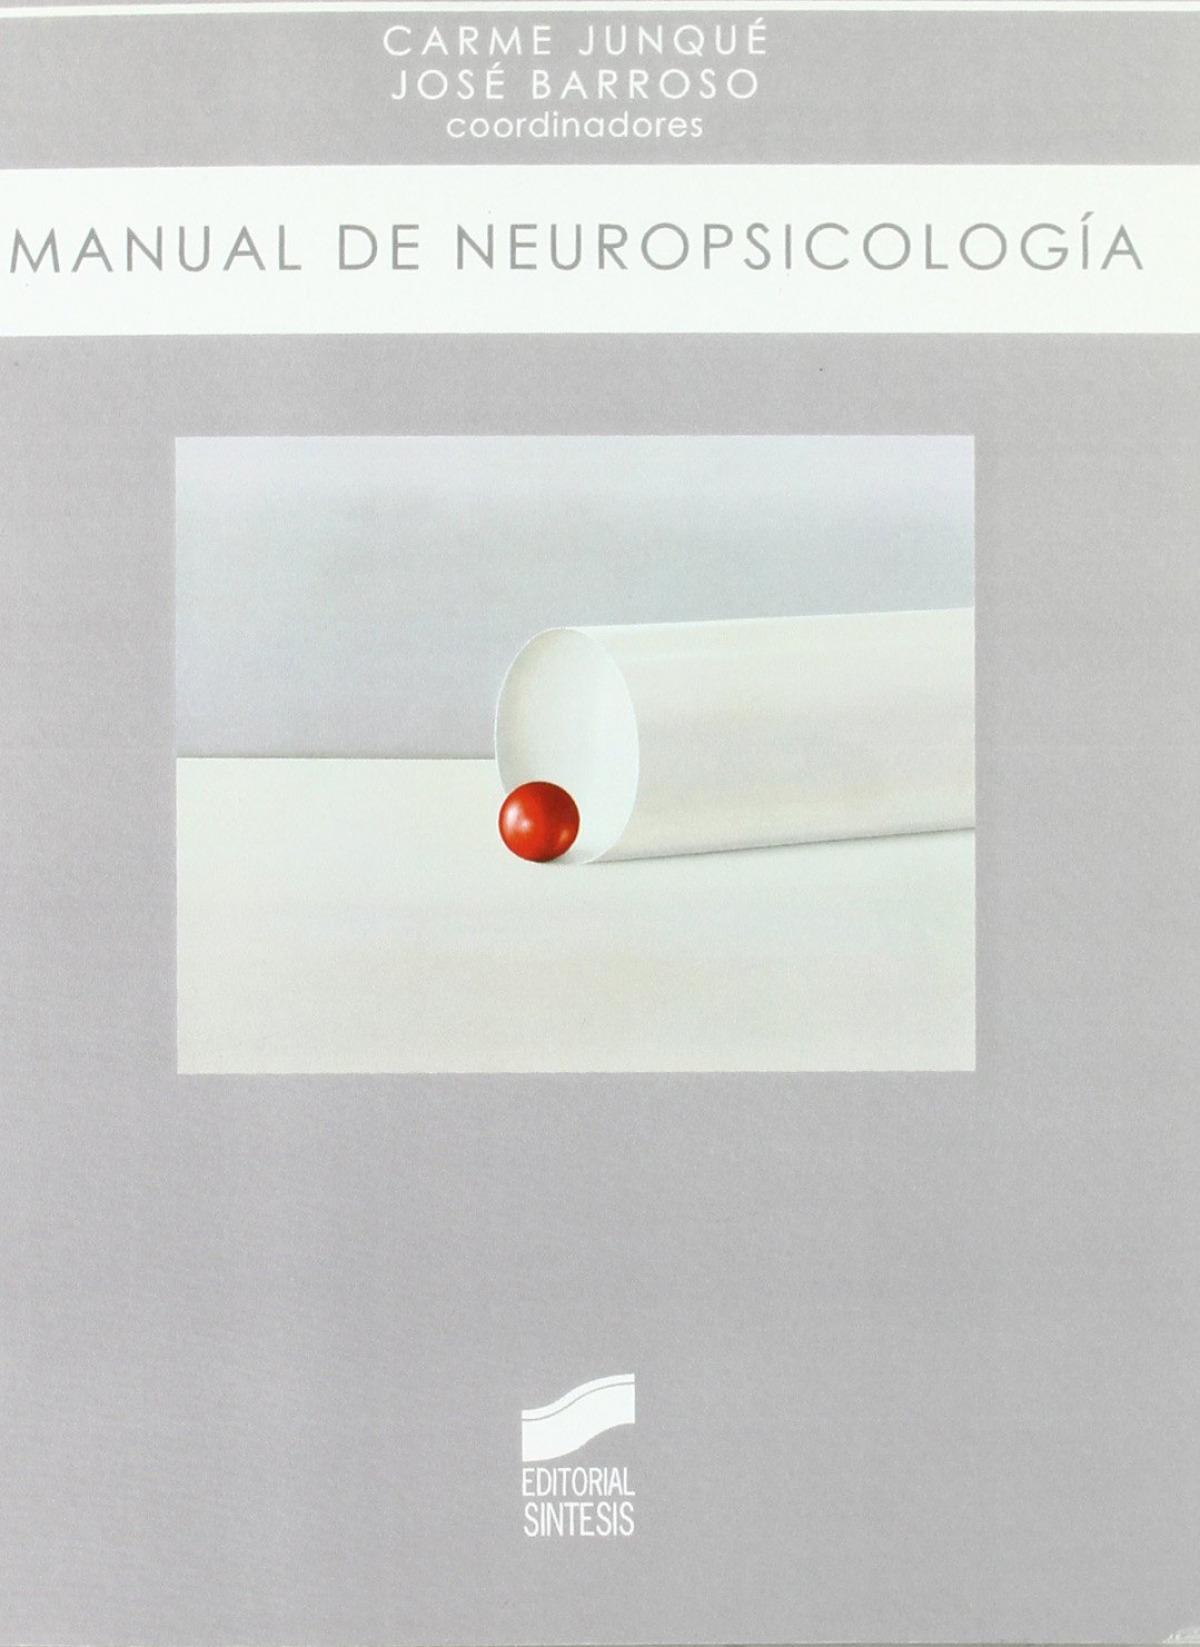 Manual de neuropsicología - Junque I Plaza, Carme